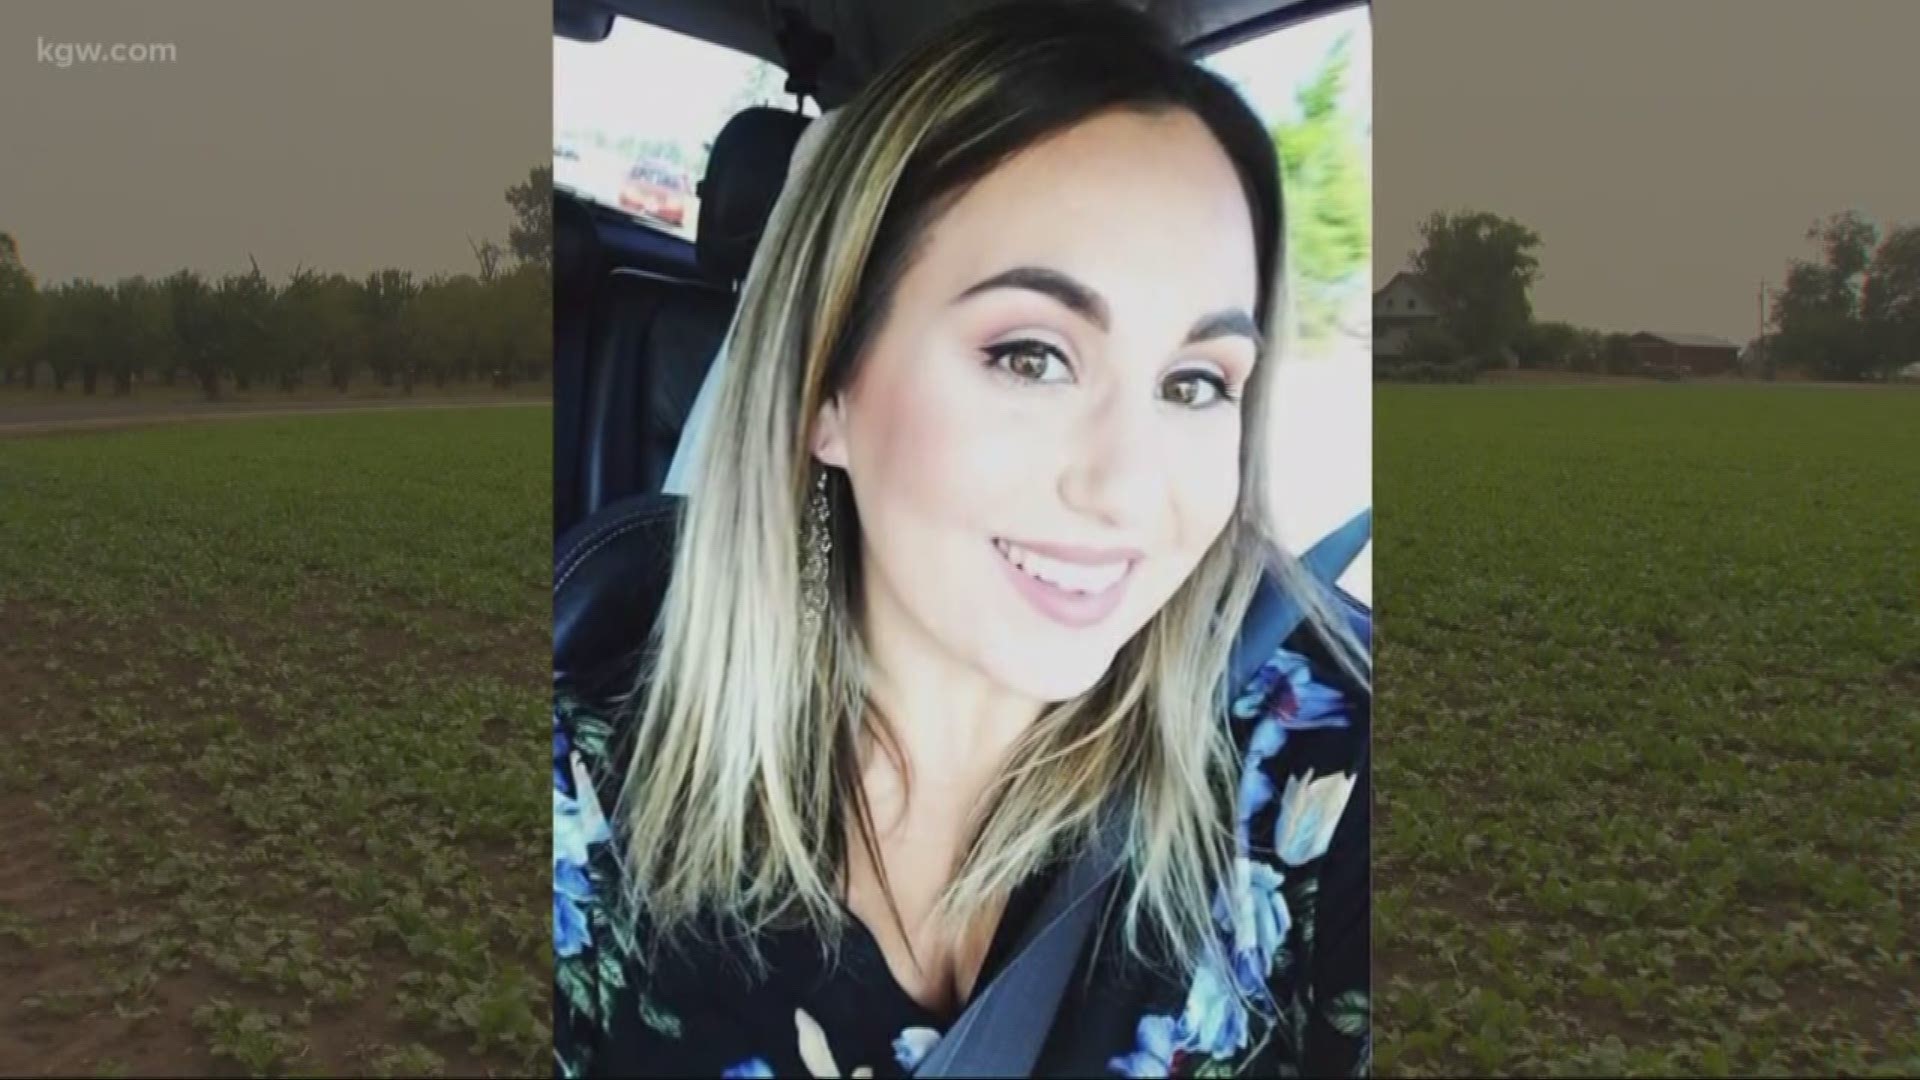 Her body was found in late August near Dayton.